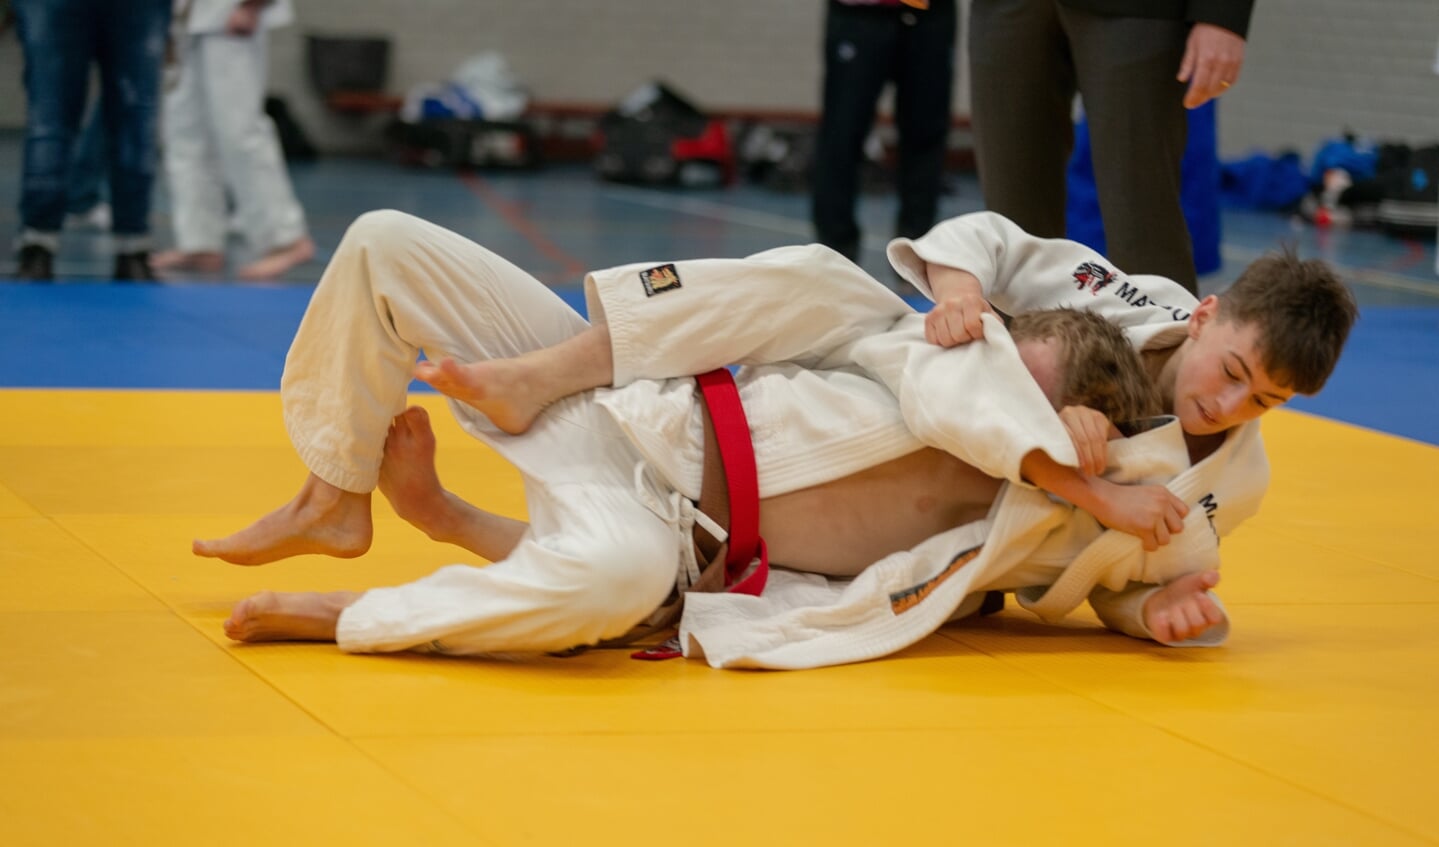 Jasper judoot